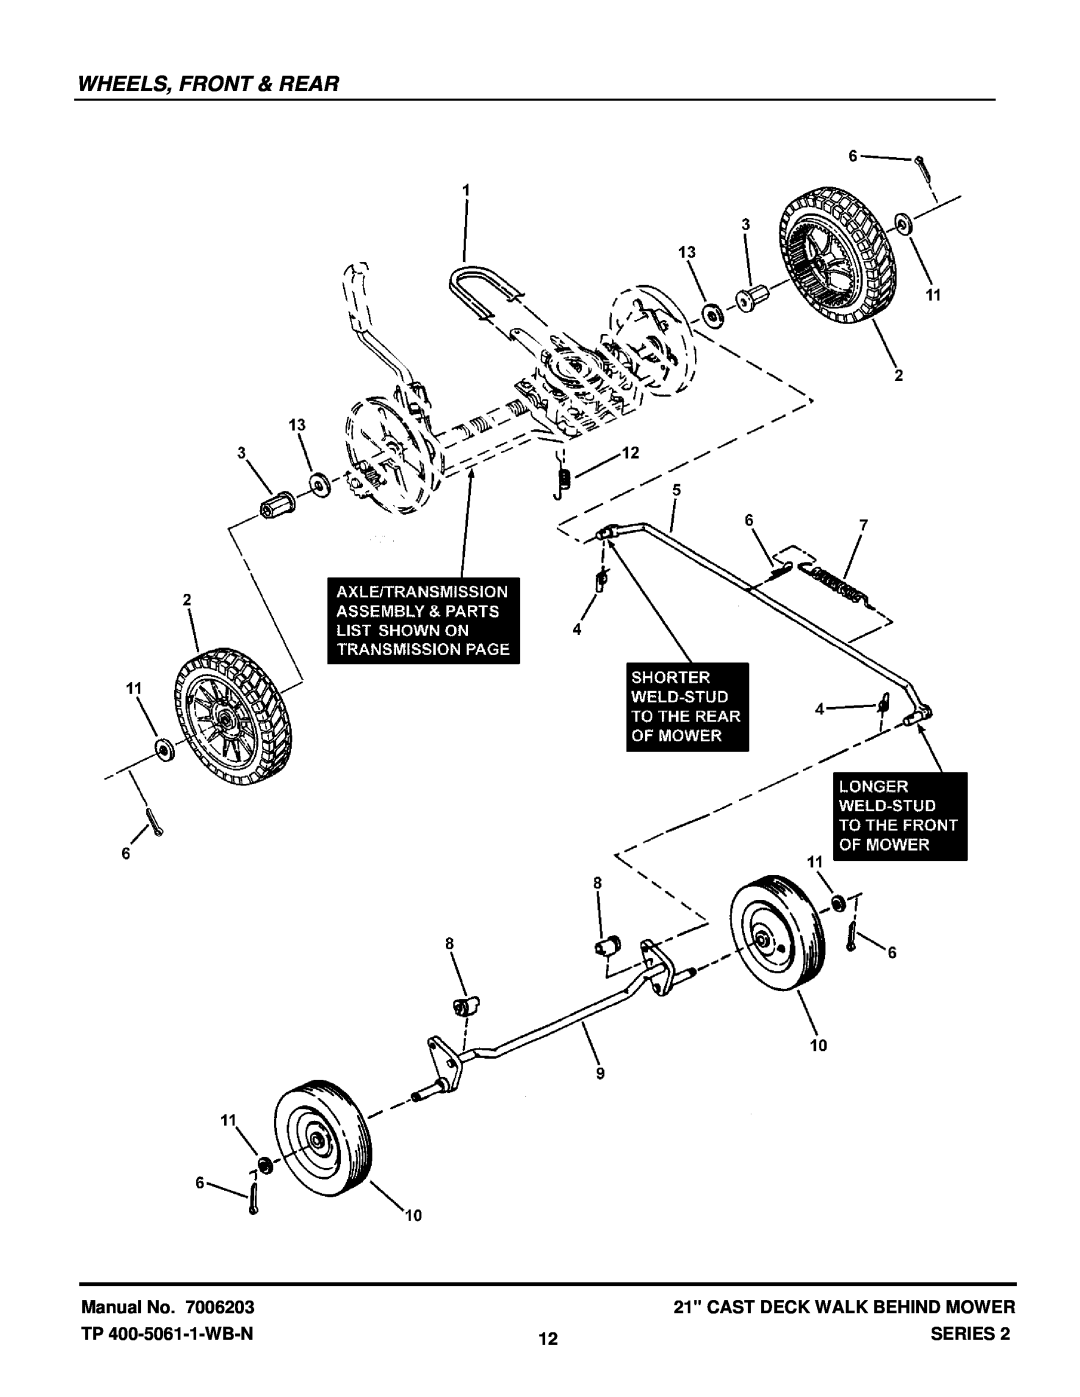 Snapper ECLP21602KWV manual Wheels, Front & Rear, Cast Deck Walk Behind Mower, TP 400-5061-1-WB-N, Series 